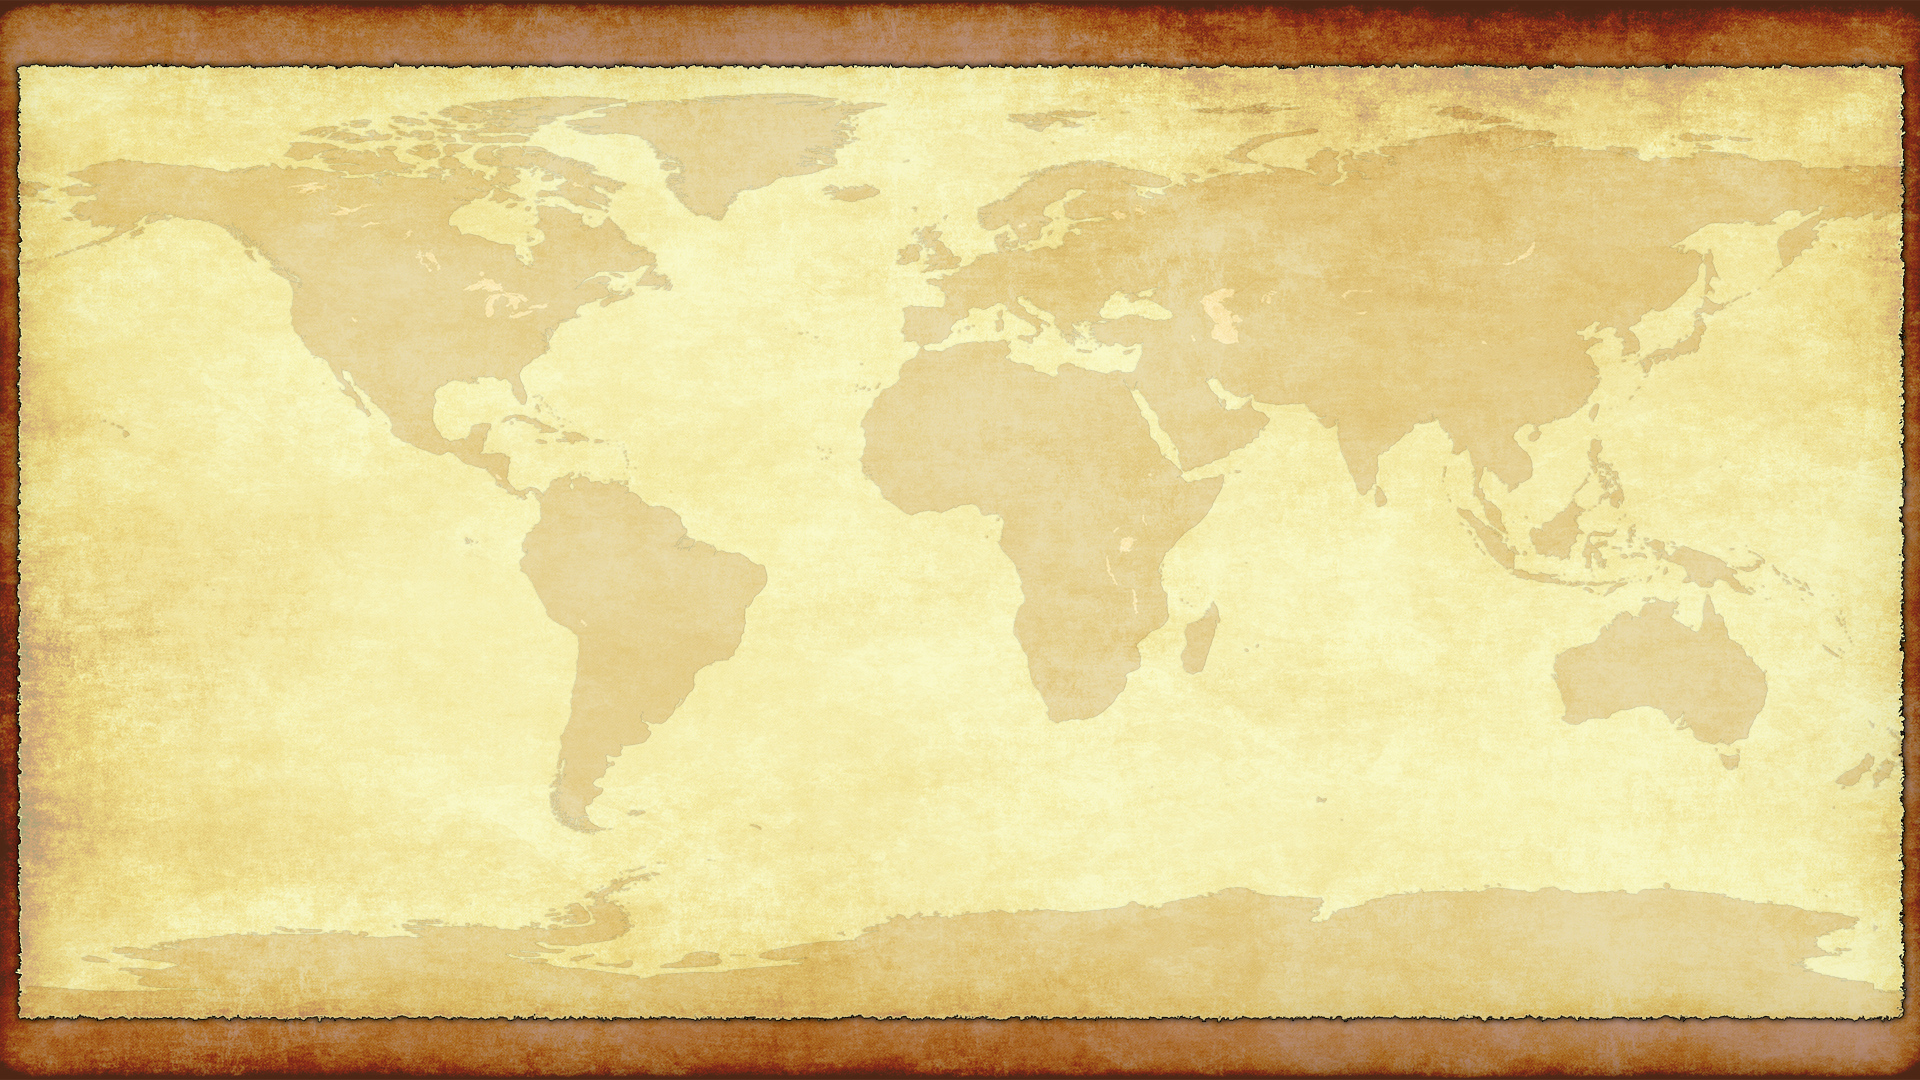 General 1920x1080 world map world map